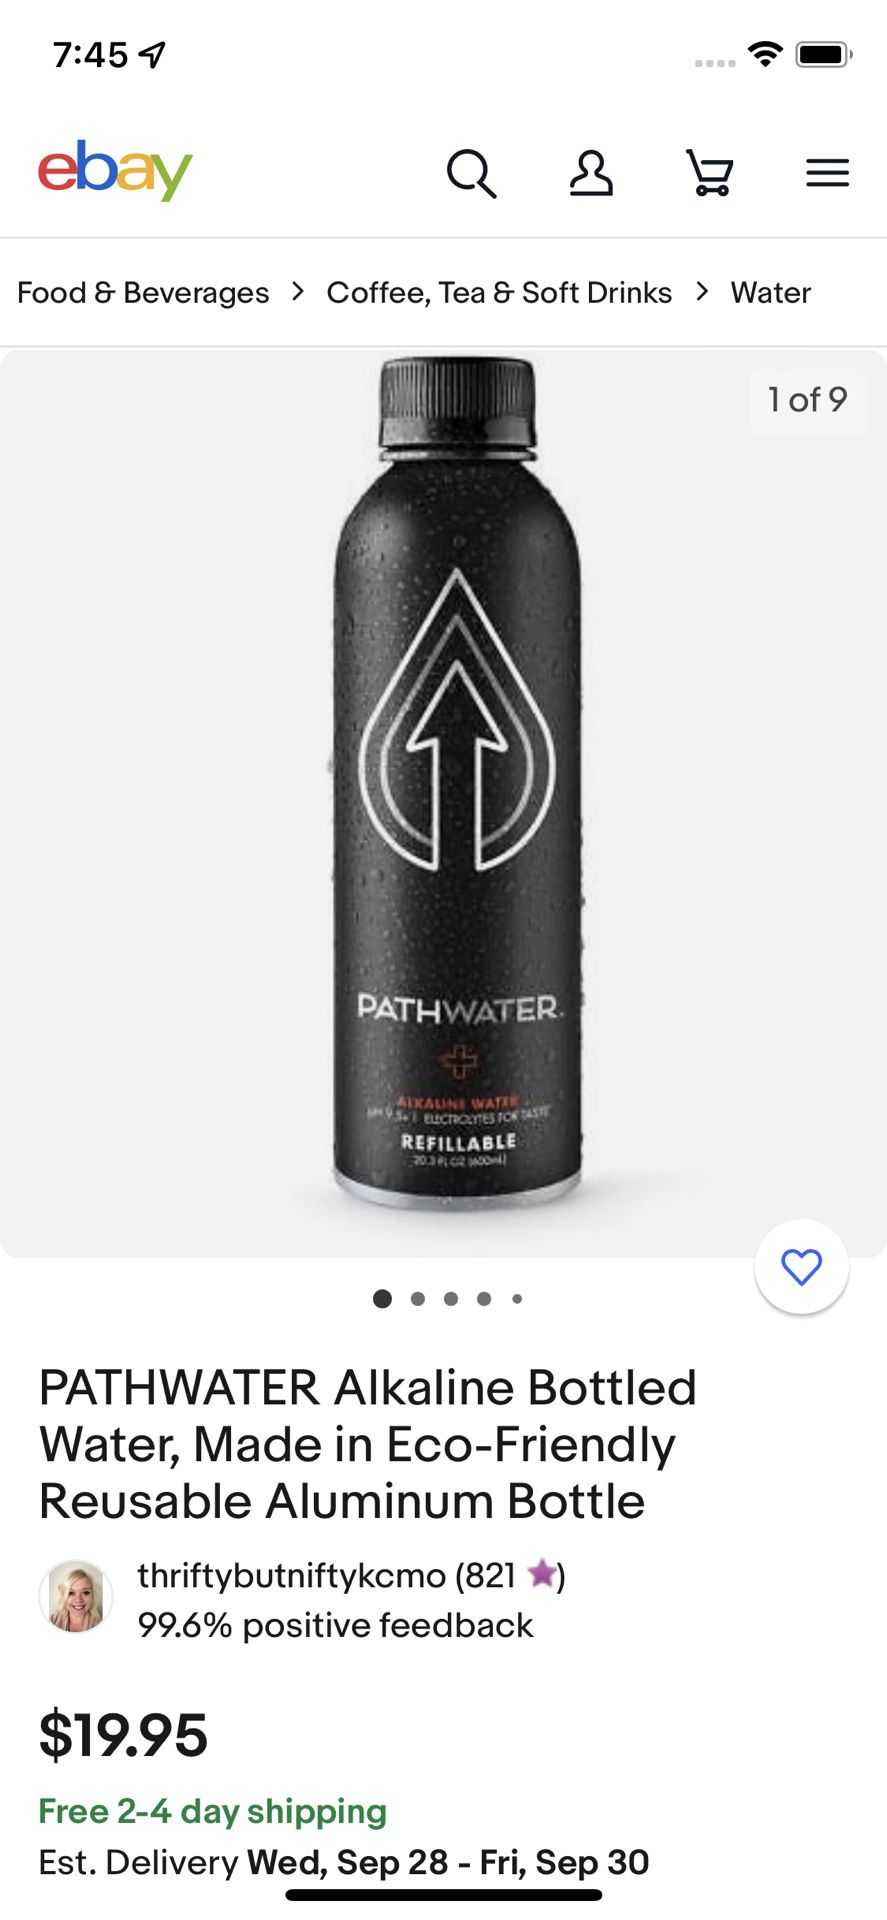 PATHWATER Alkaline Bottled Water, Made in Eco-Friendly Reusable Aluminum Bottle.